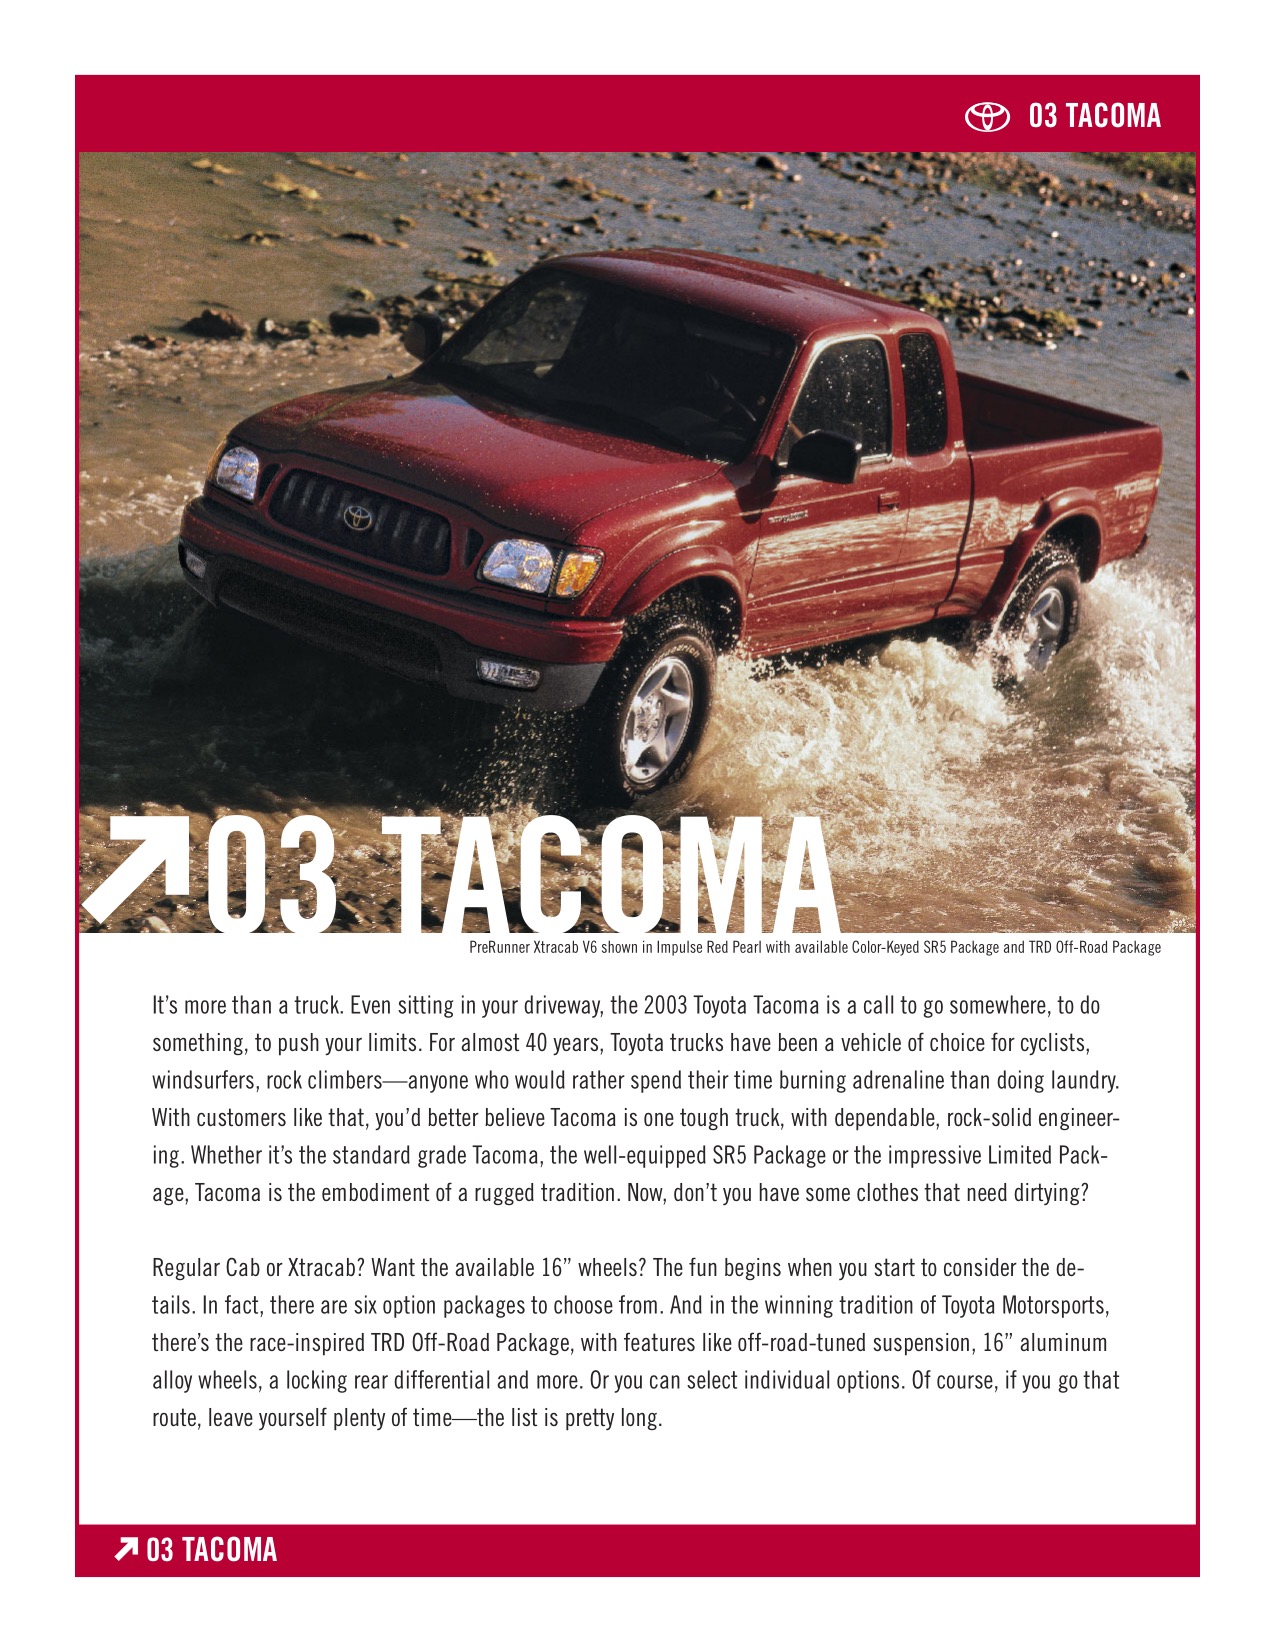 2003 Toyota Tacoma Brochure Page 4